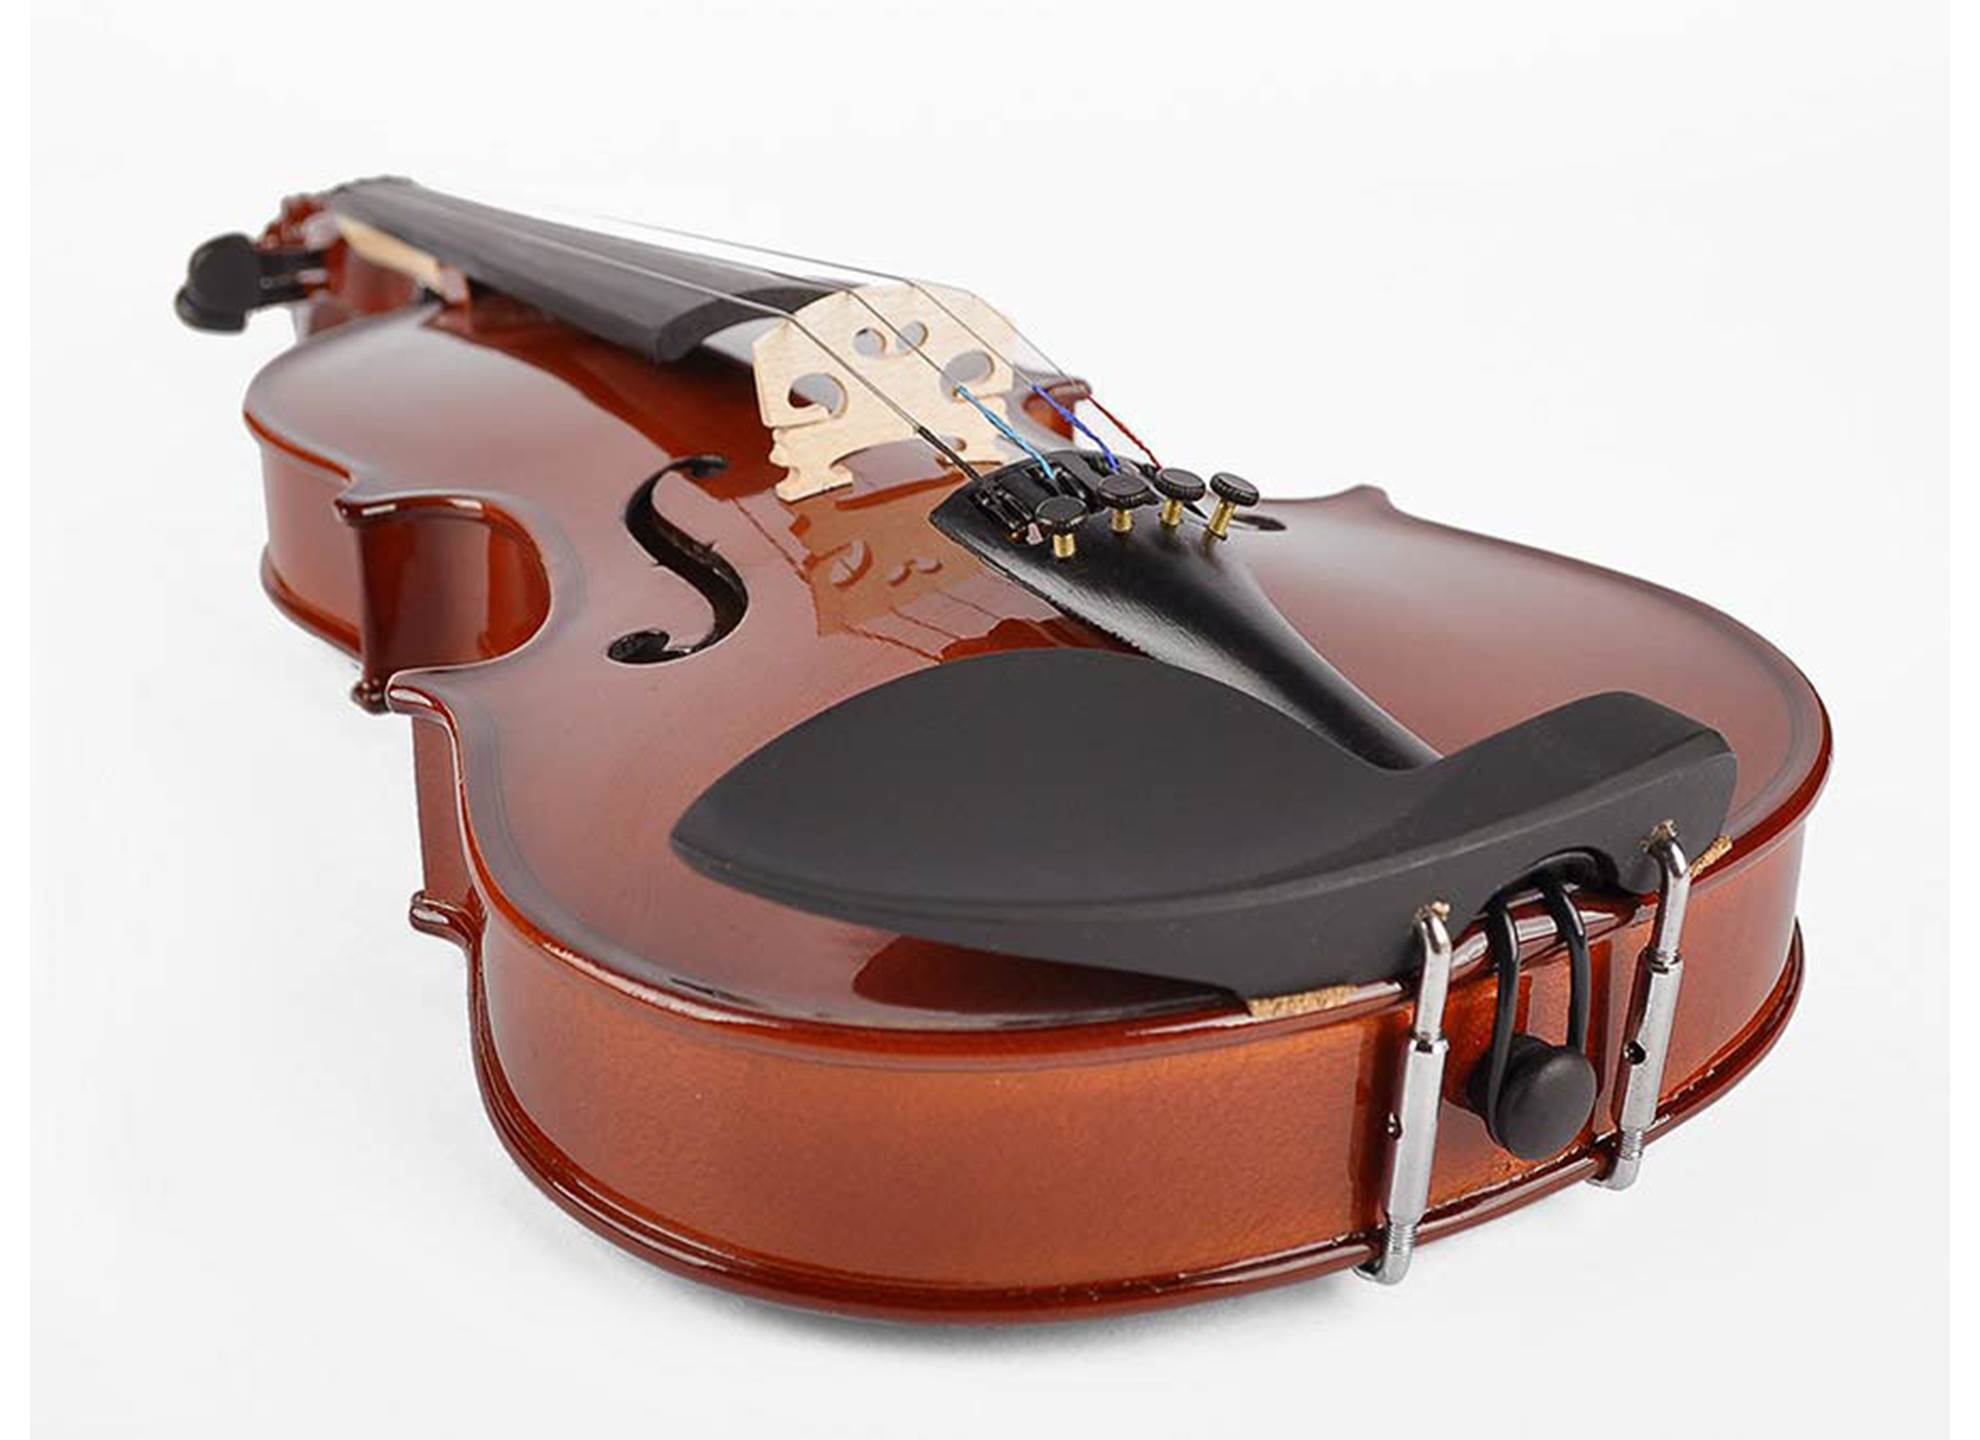 LV-1544 Violin Set Natural 4/4